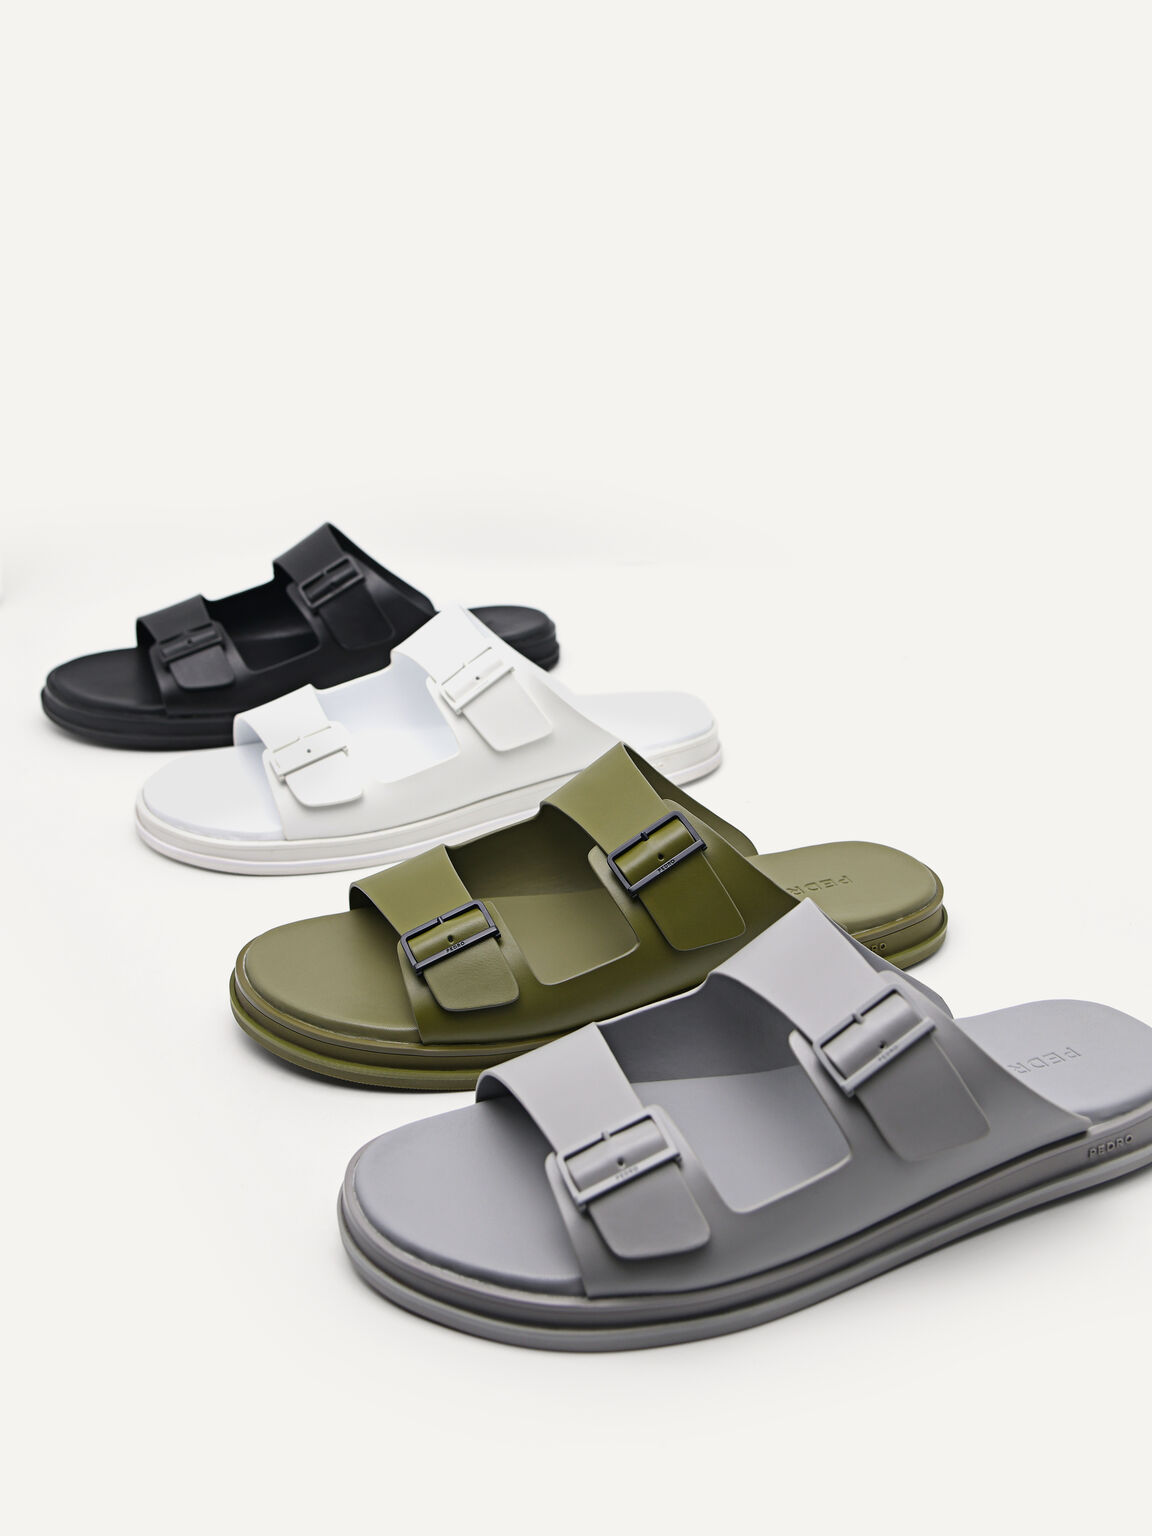 Monochrome Double Strap Slide Sandals, Light Grey